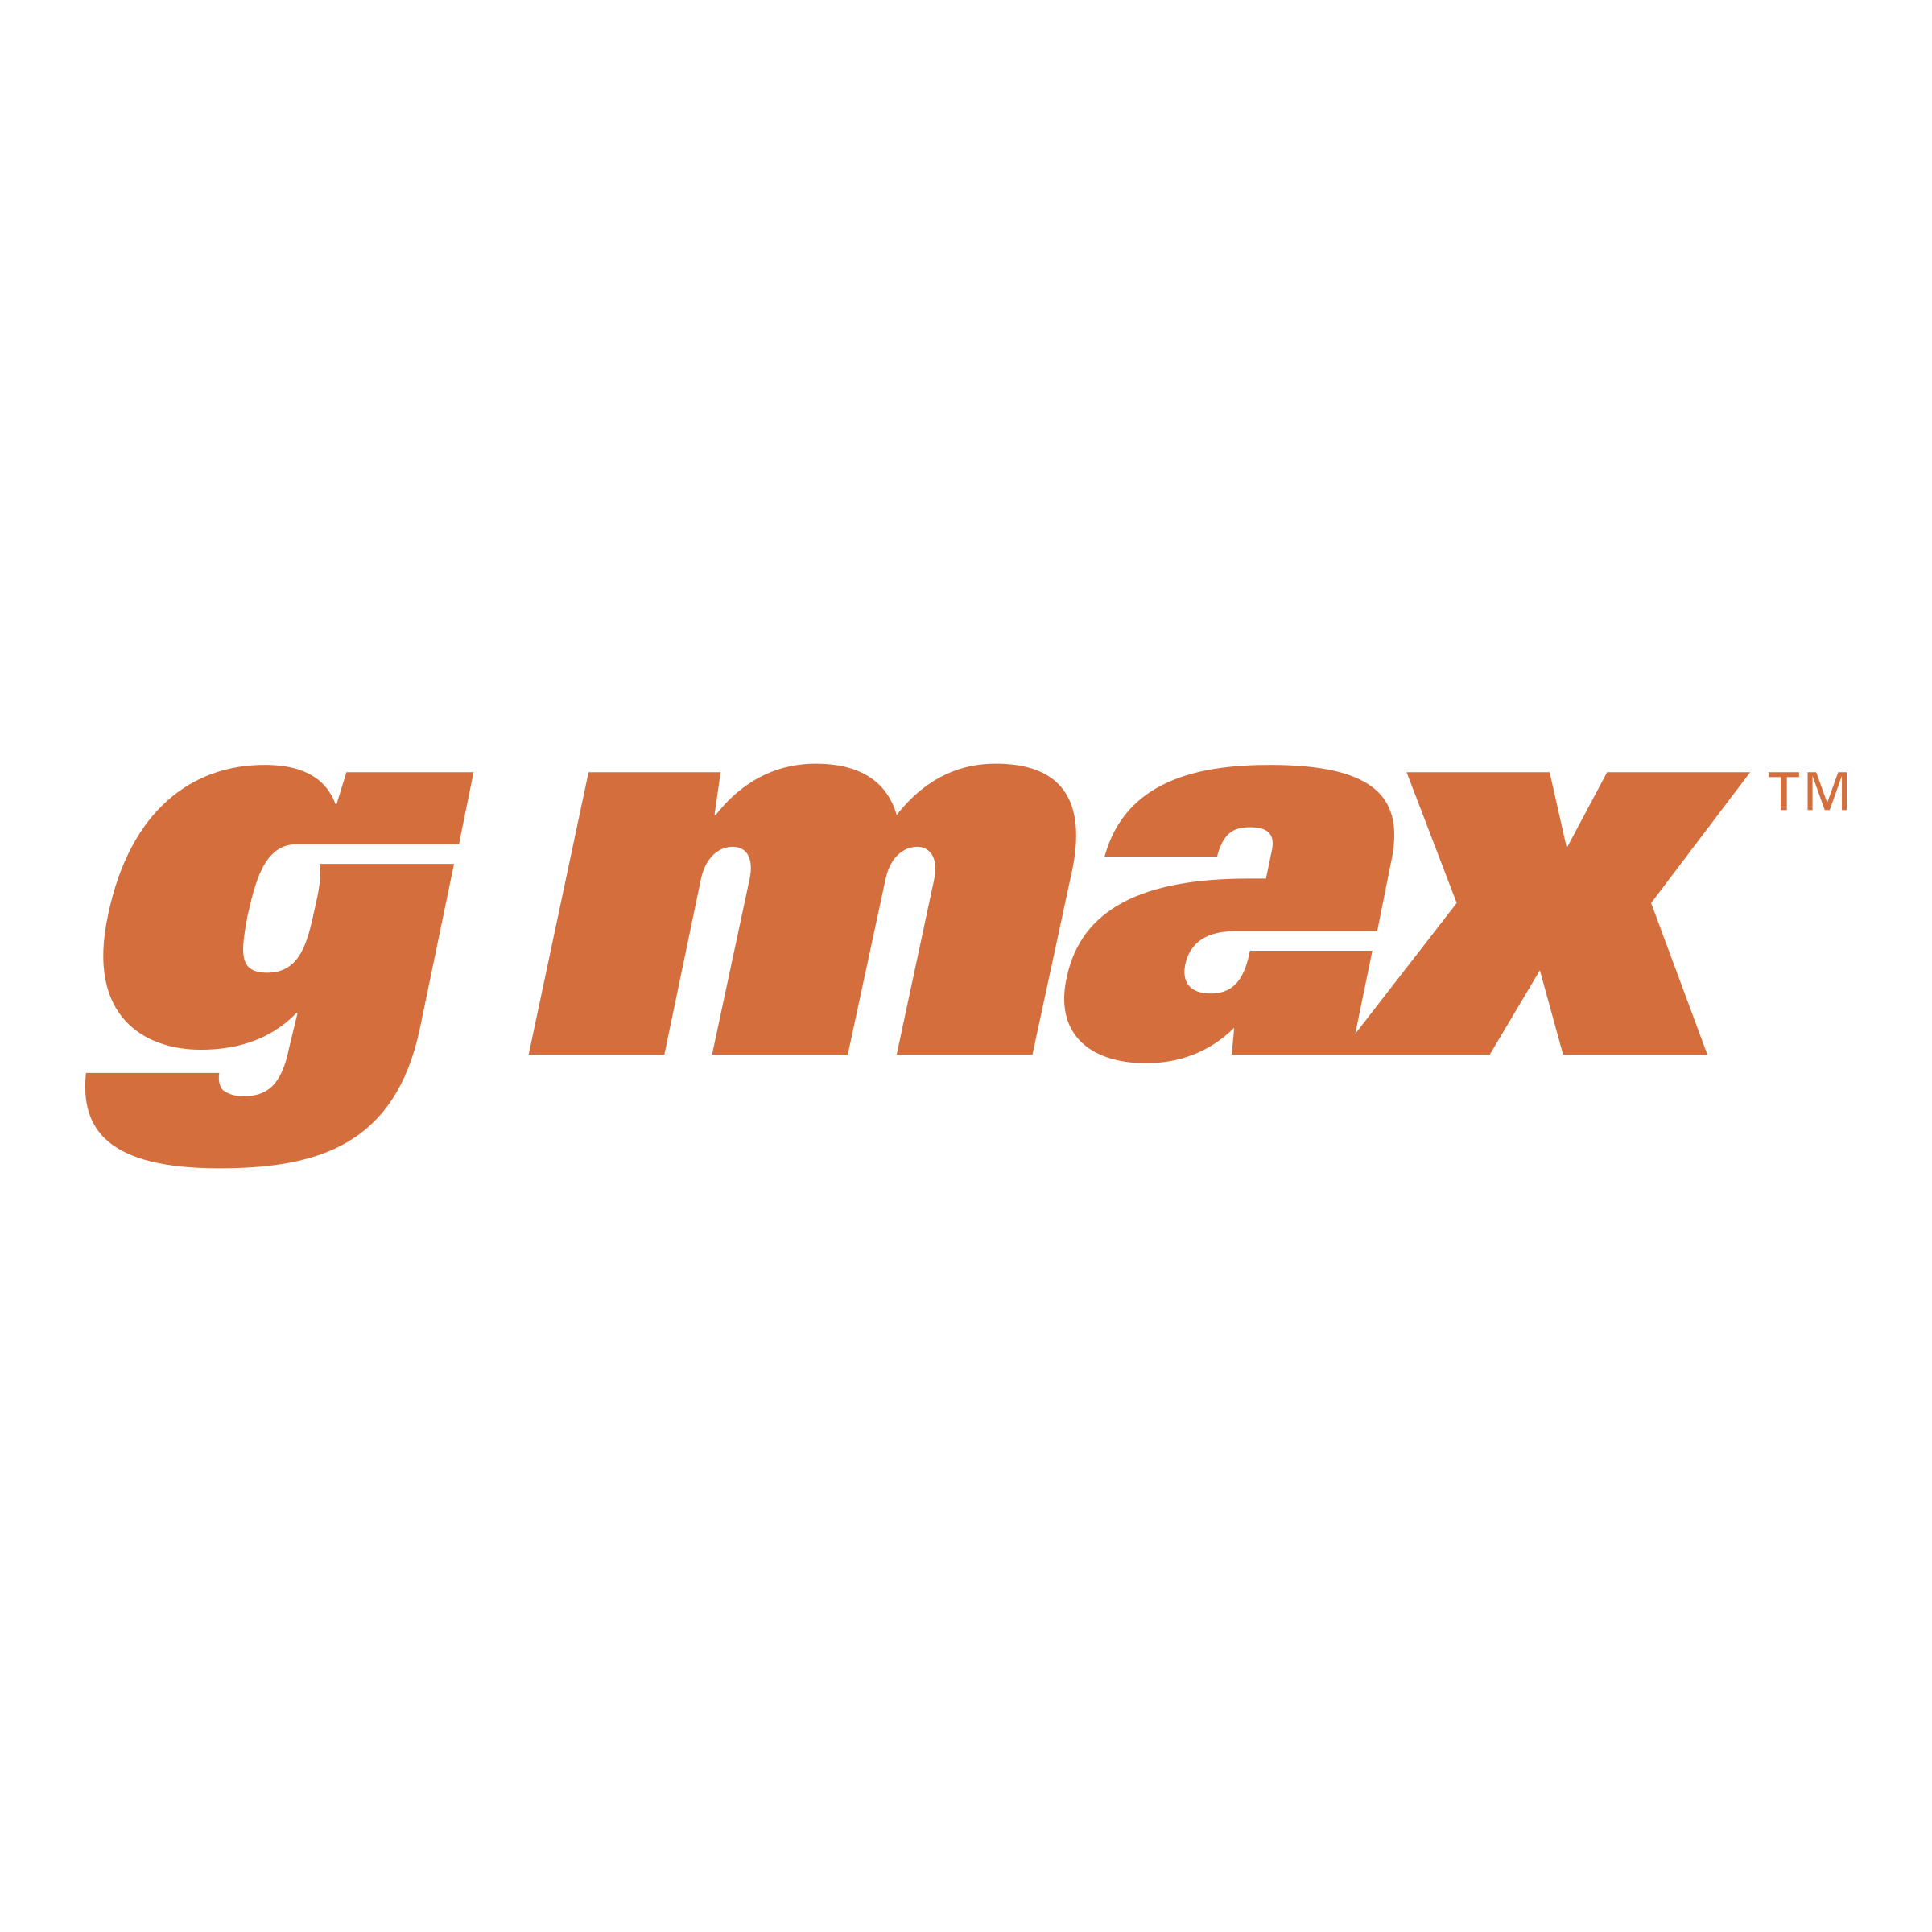 Gmax Logo - Gmax Logo PNG Transparent & SVG Vector - Freebie Supply